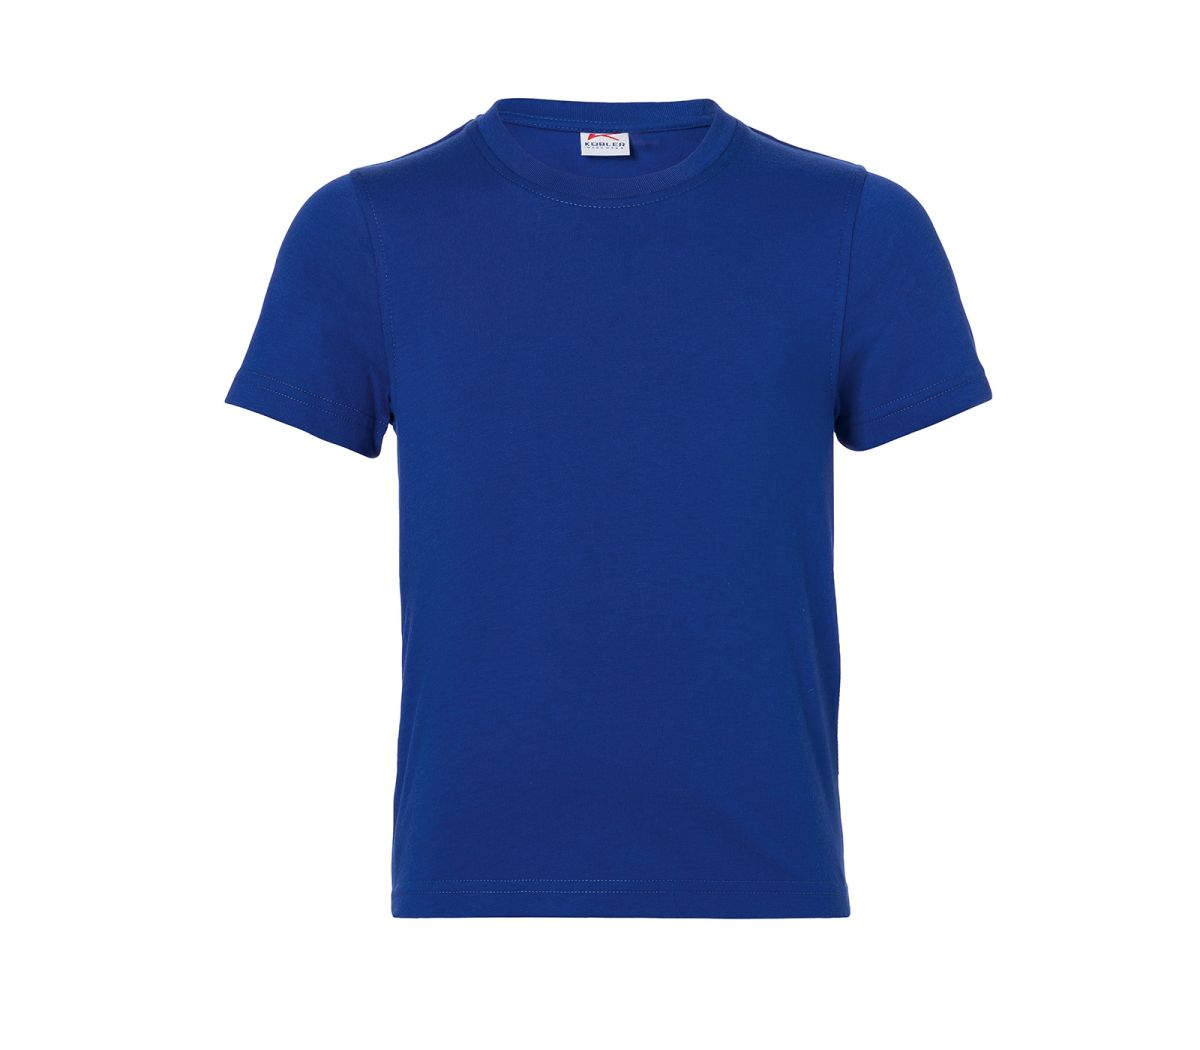 KÜBLER KIDZ T-Shirt Jungen in kbl. Blau, Größe 146-152